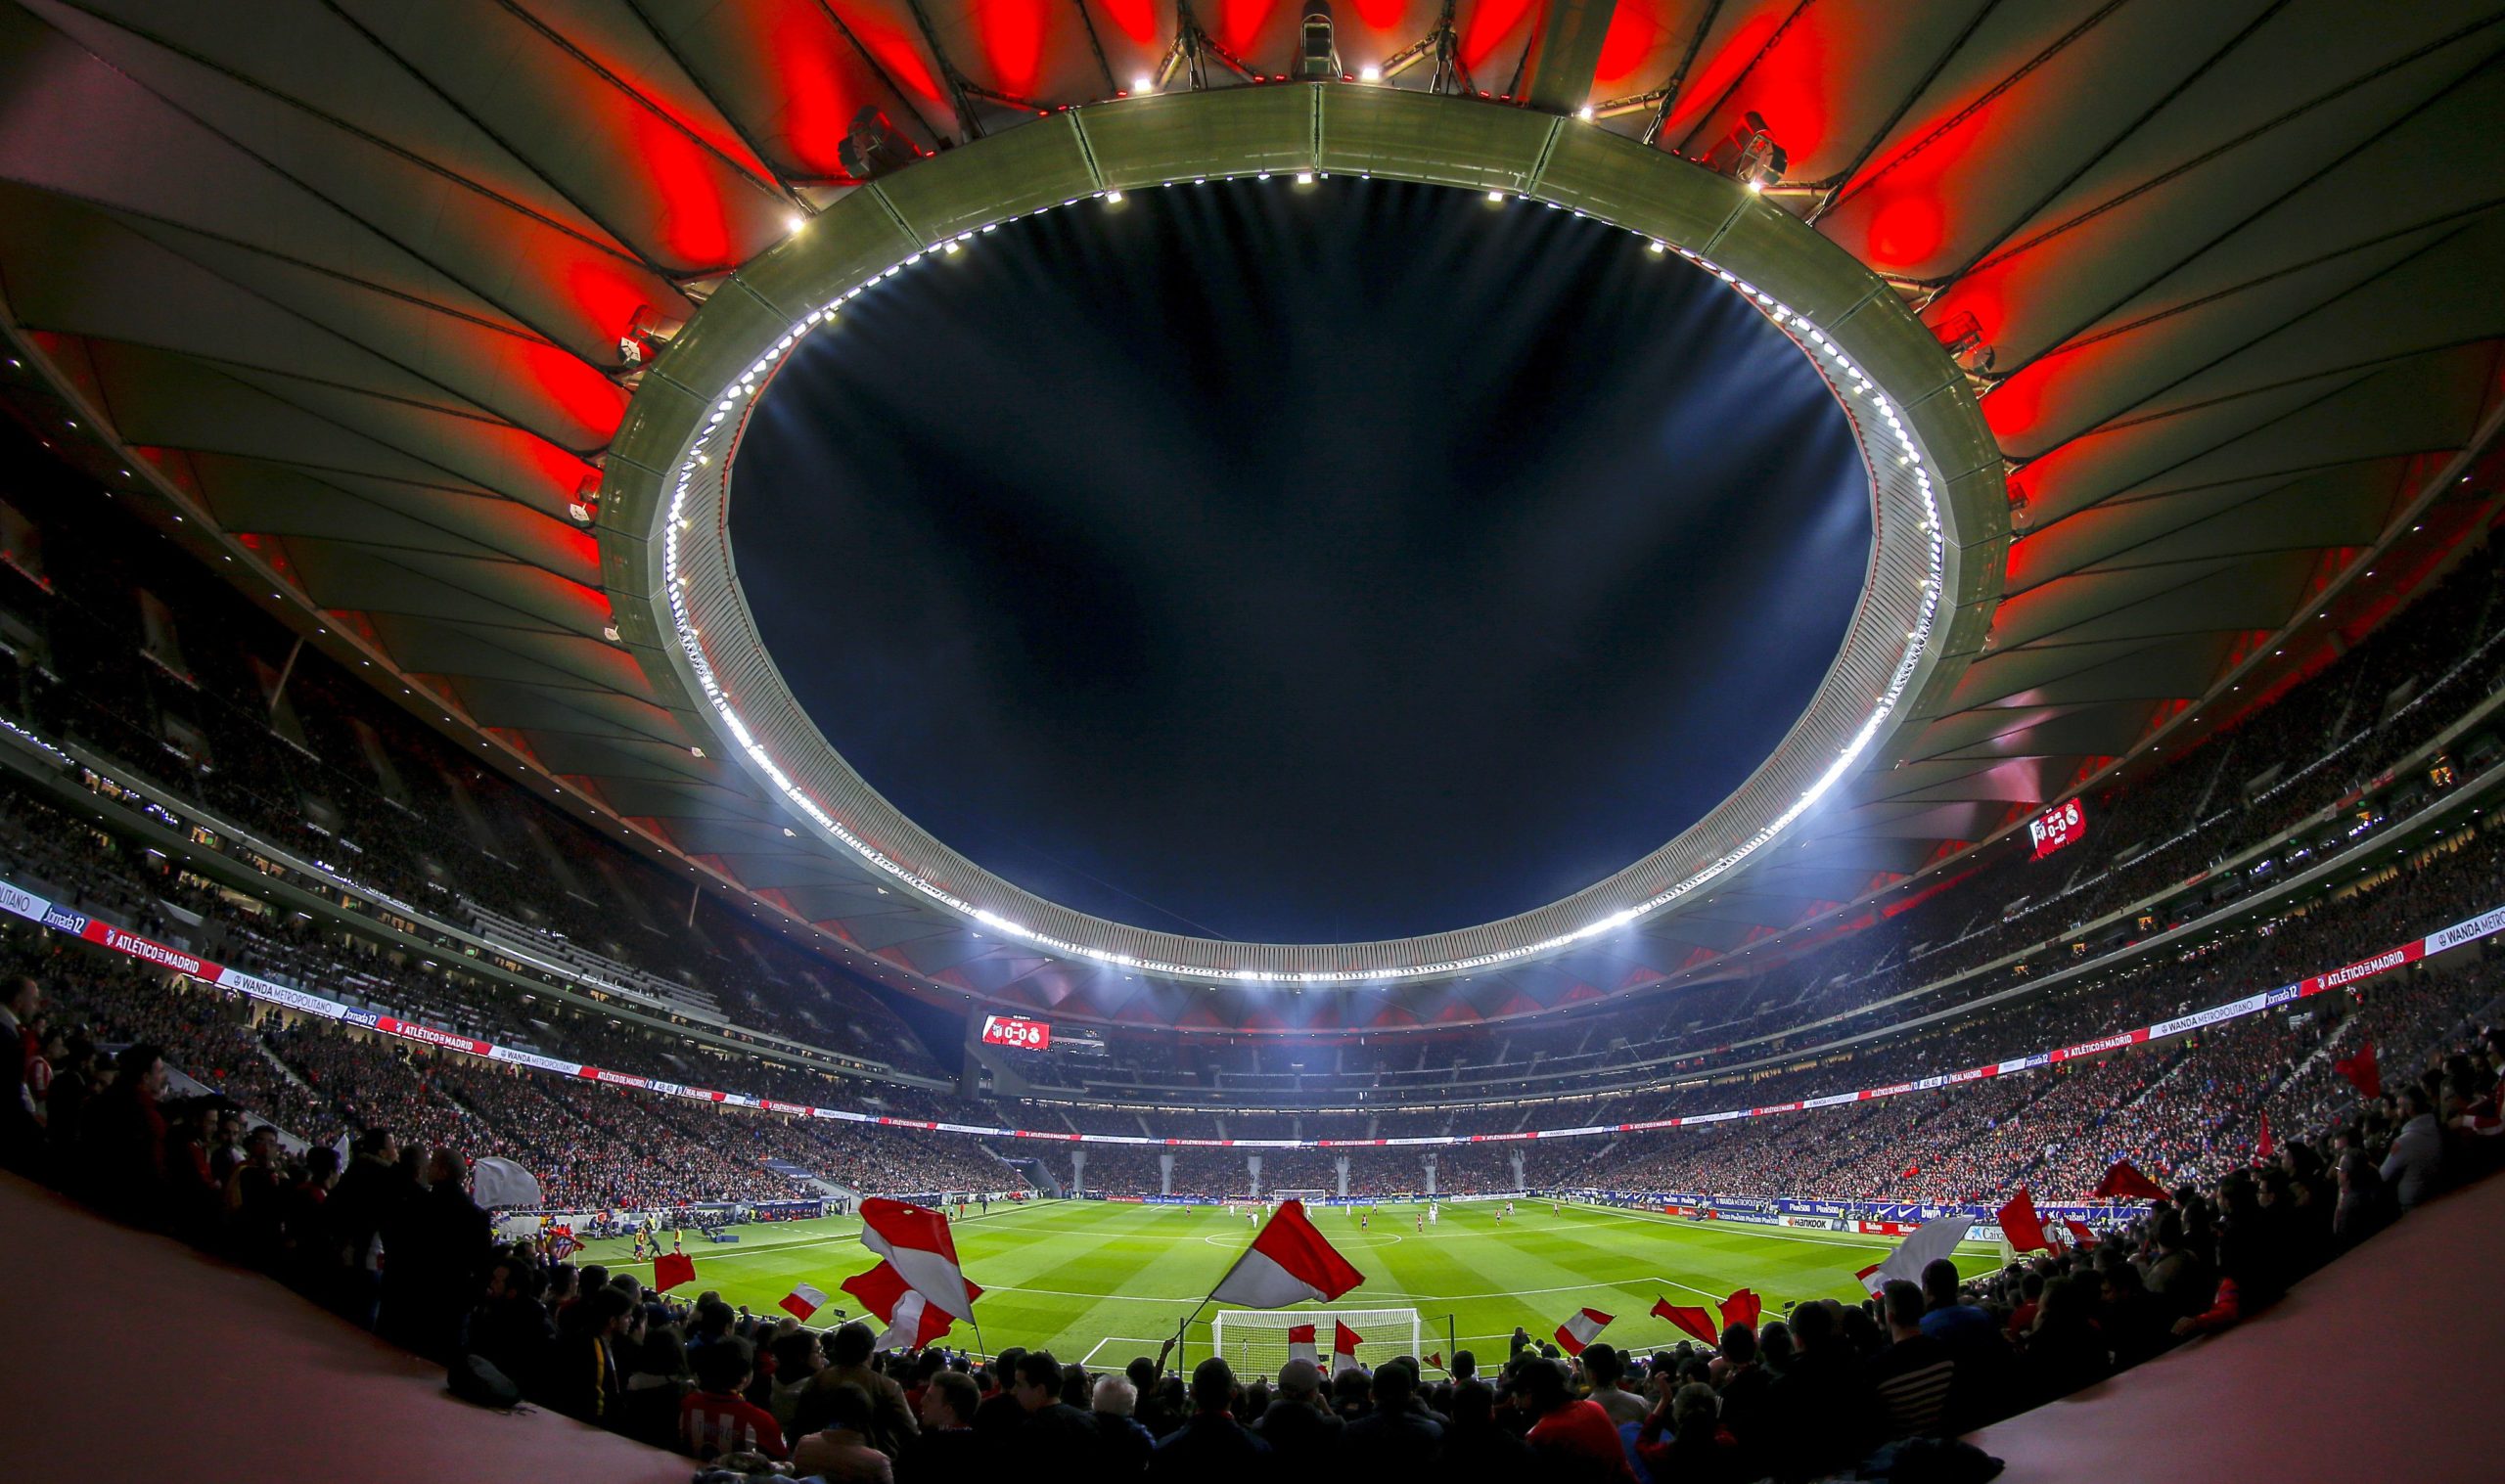 Atleti_s_Wanda_Metropolitano_stadium_8ed4ac105f-1